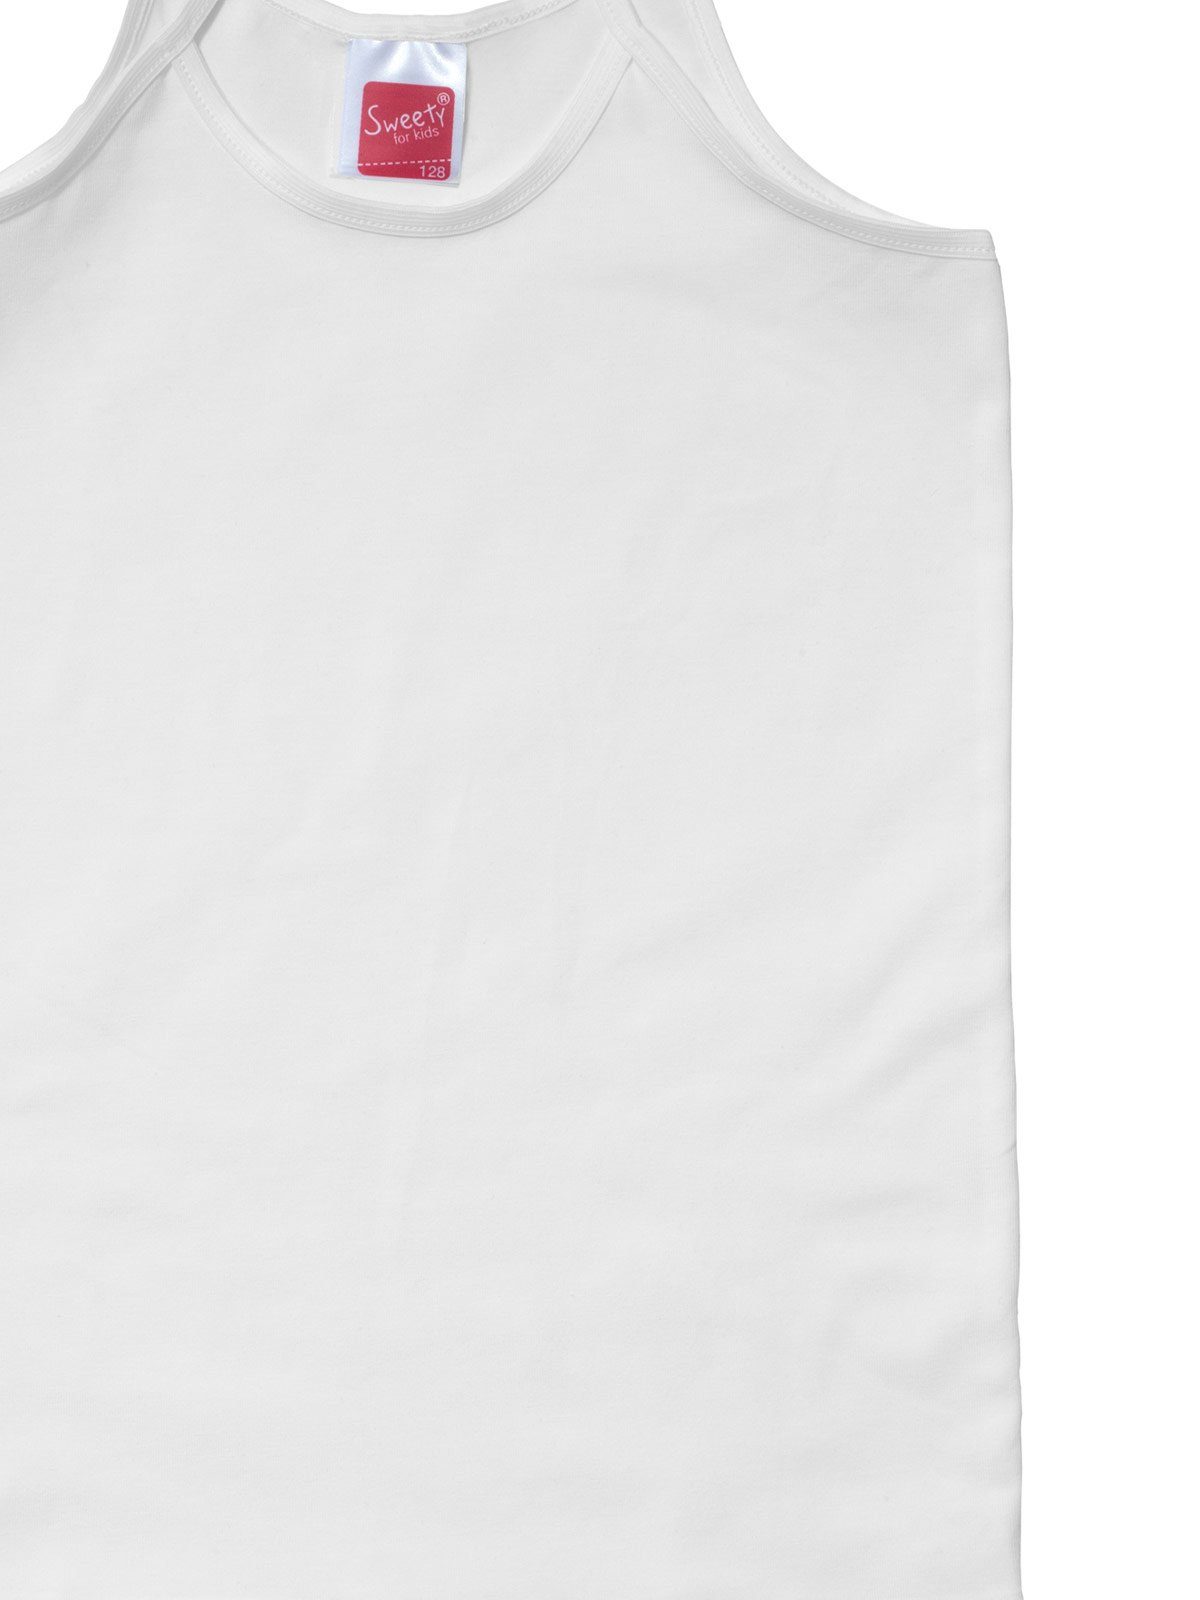 Sweety for Kids Unterhemd Trägerhemd Mädchen (Stück, Single 1-St) Markenqualität hohe Jersey